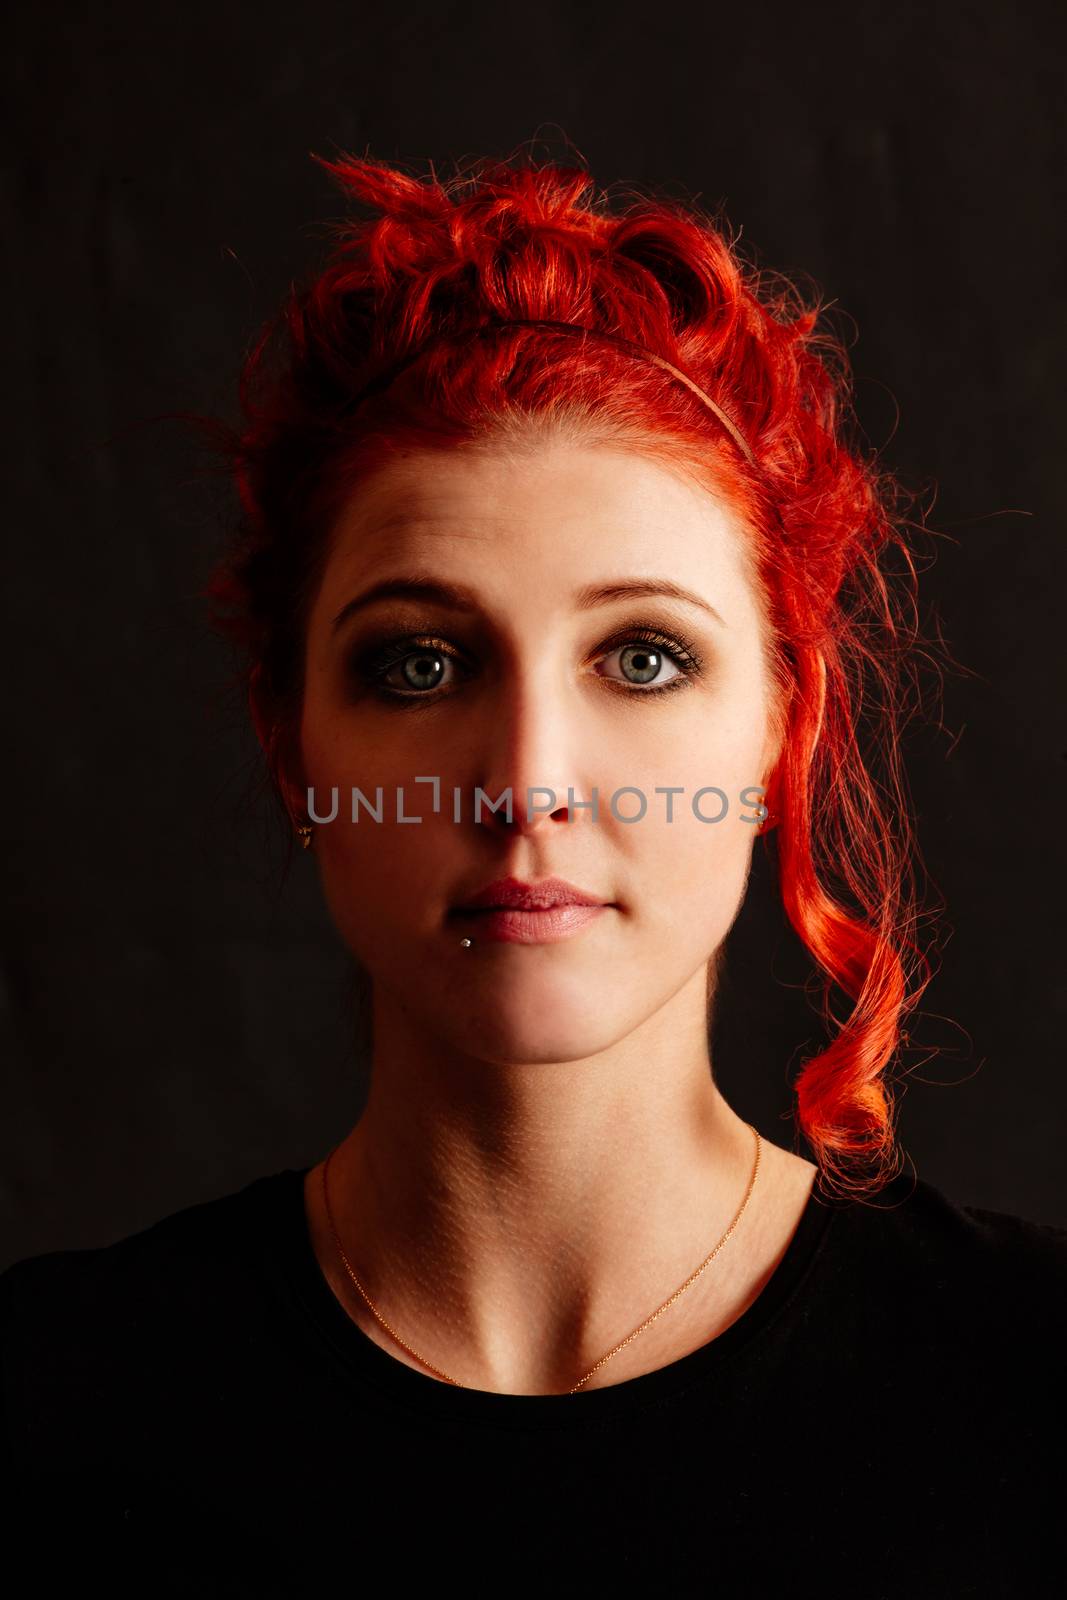 Redhead woman portrait by sumners